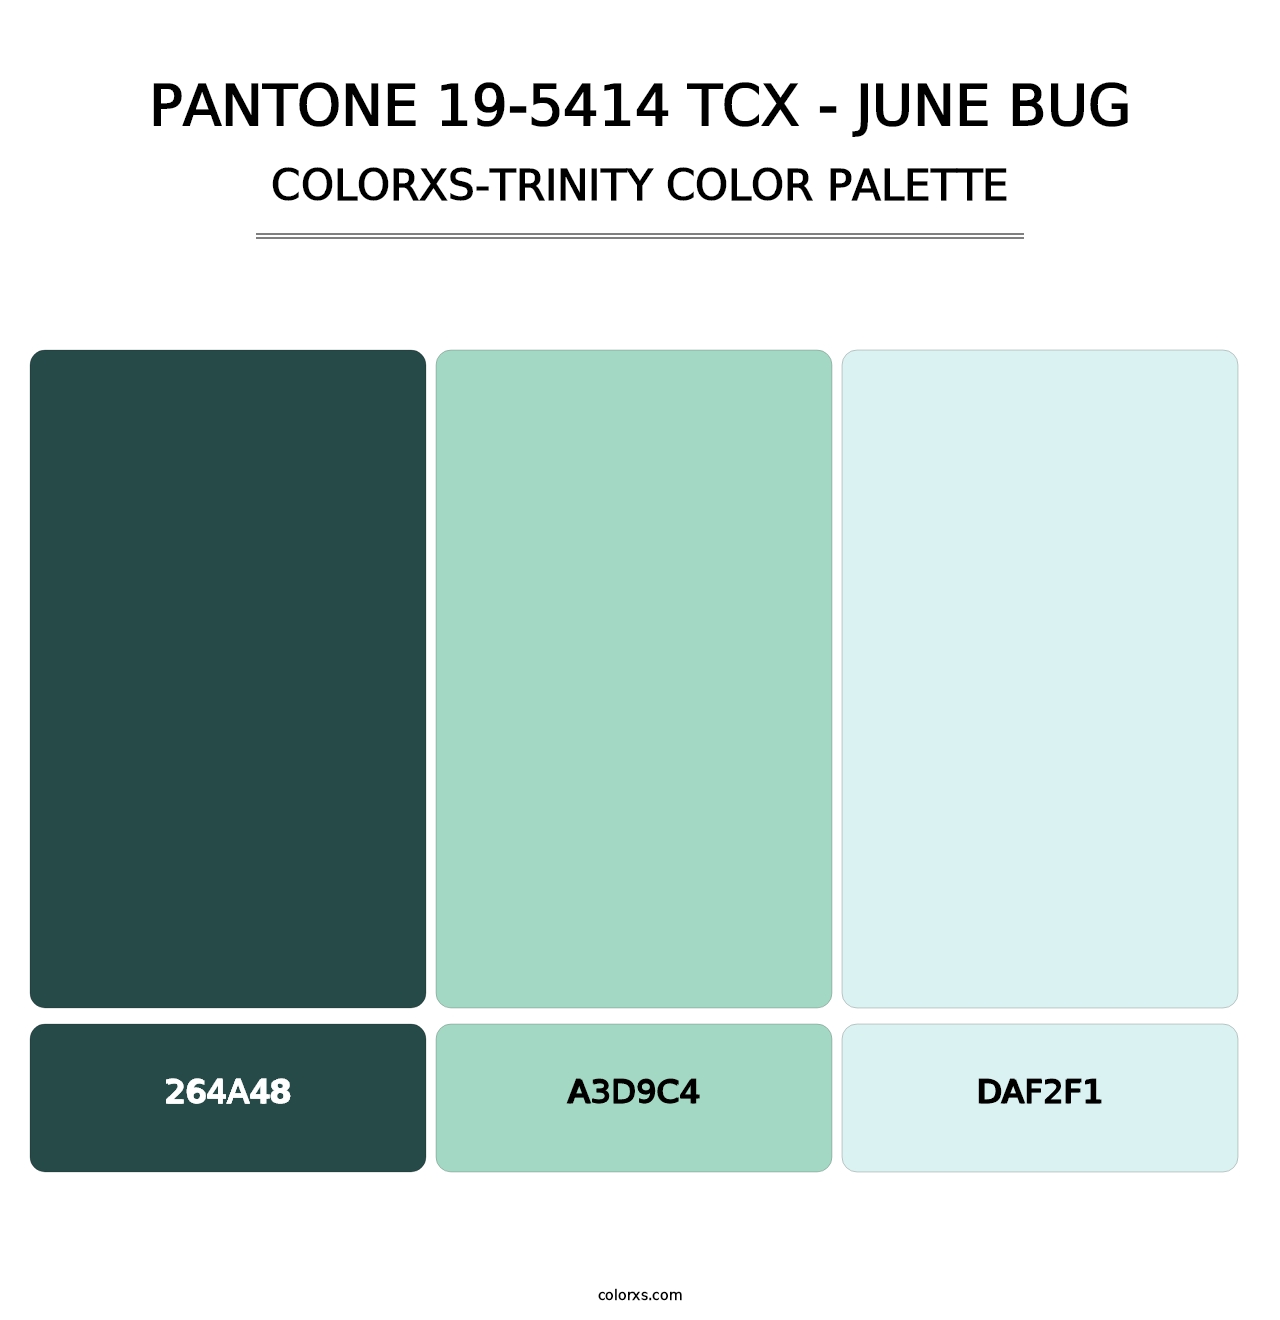 PANTONE 19-5414 TCX - June Bug - Colorxs Trinity Palette